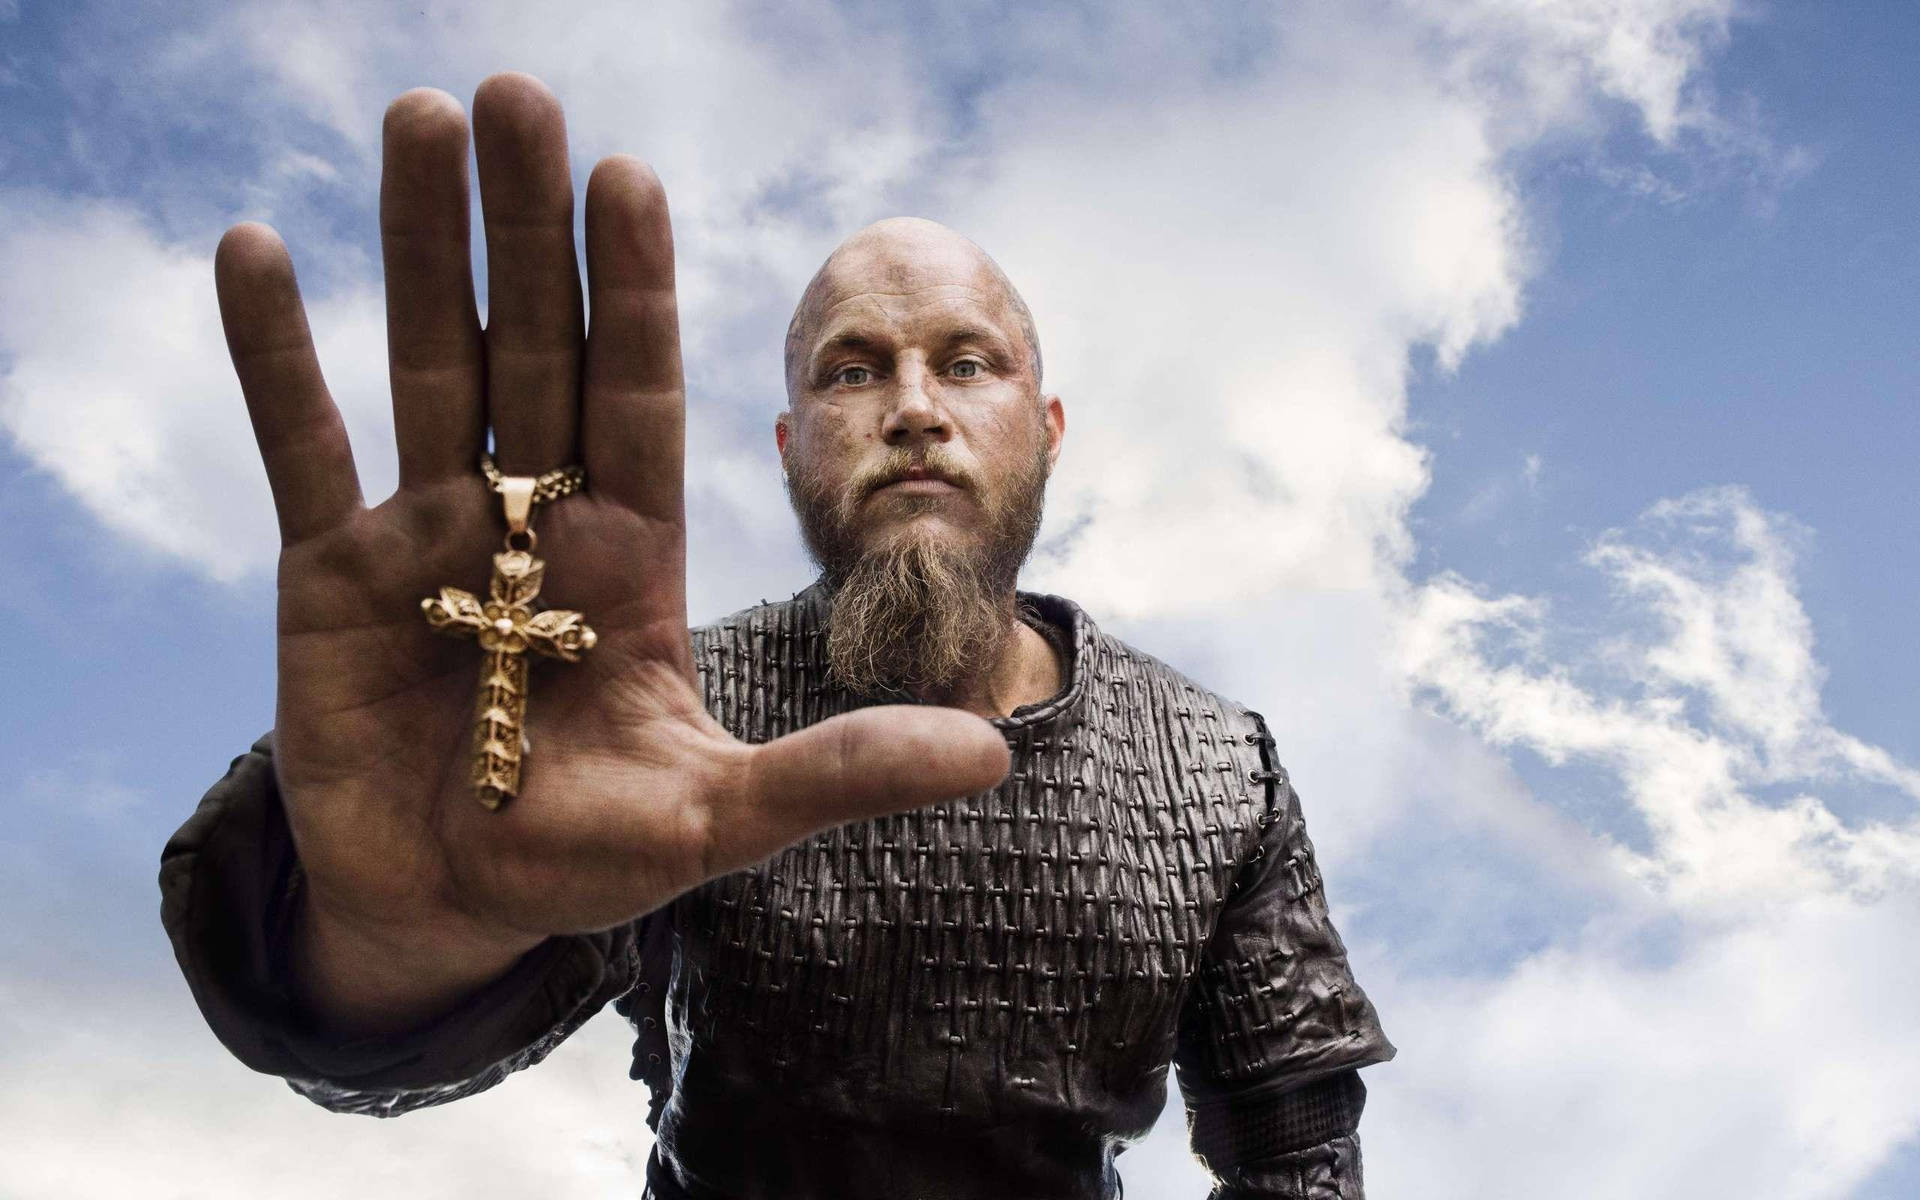 Ragnar Lothbrok From Vikings Holding Cross